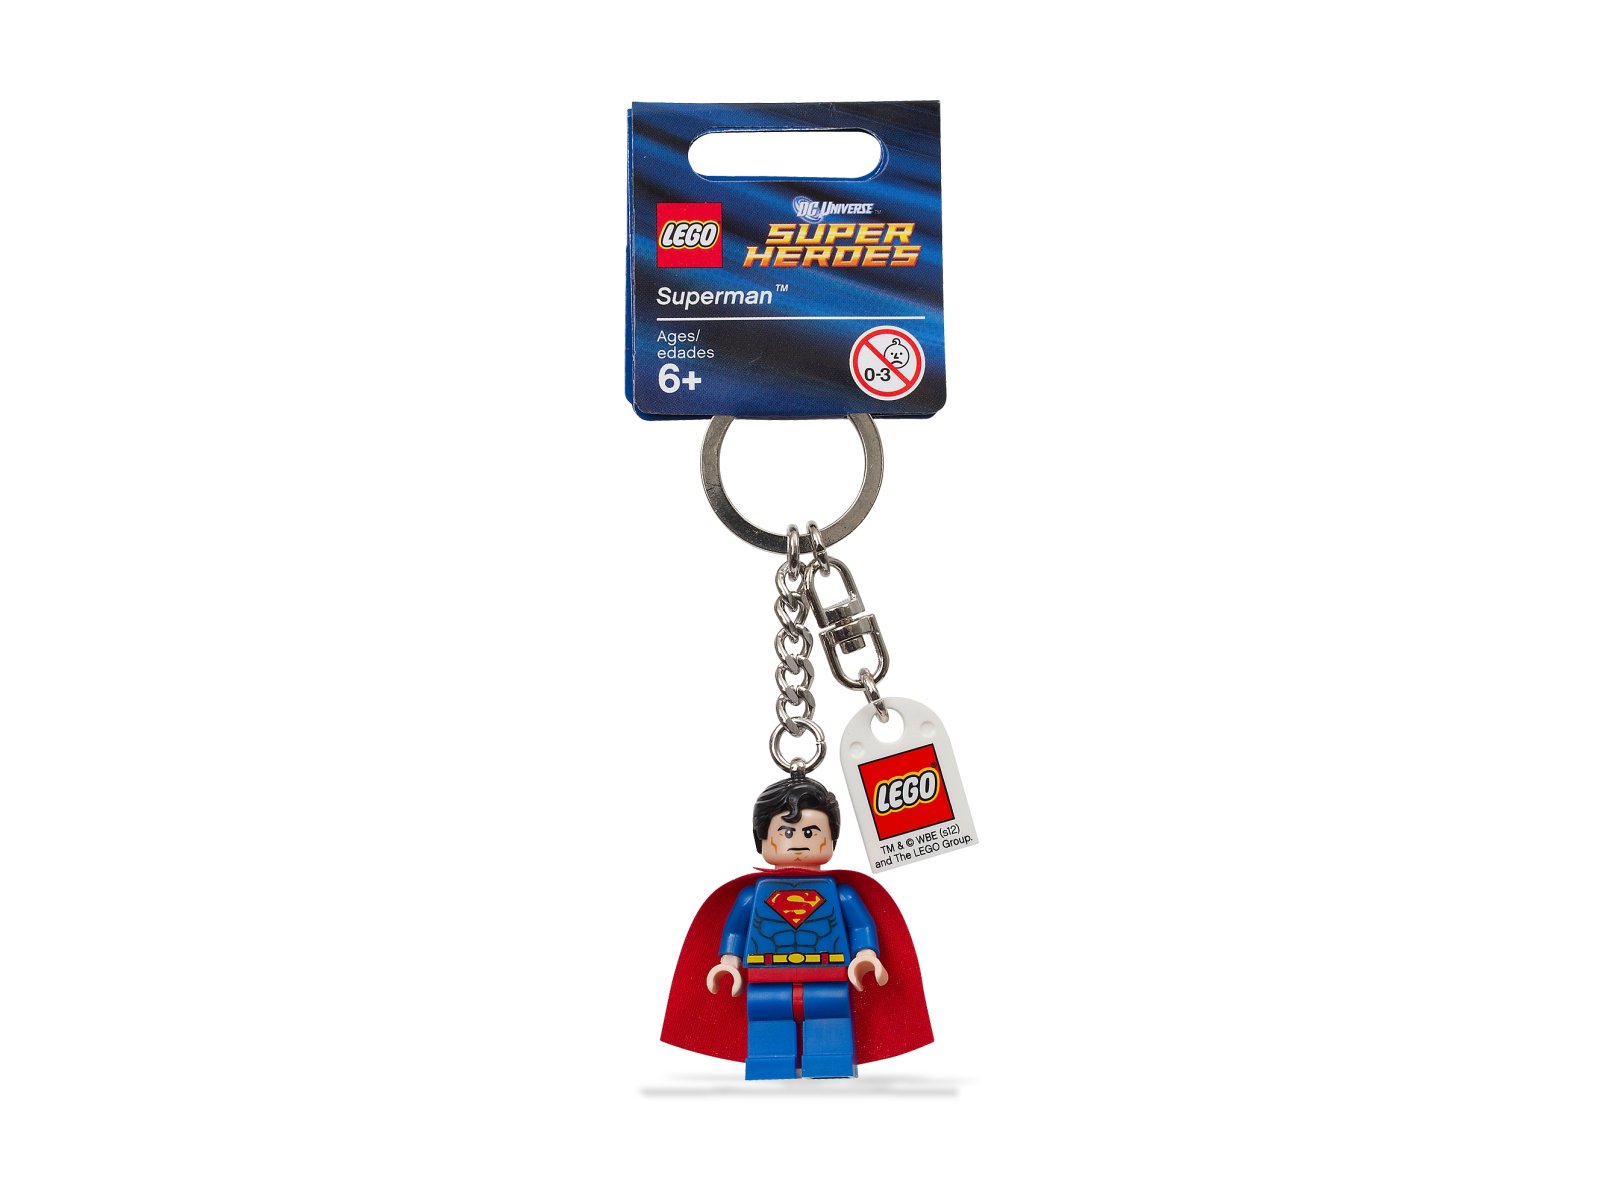 LEGO 853430 DC Comics Super Heroes Brelok do kluczy z Supermanem™